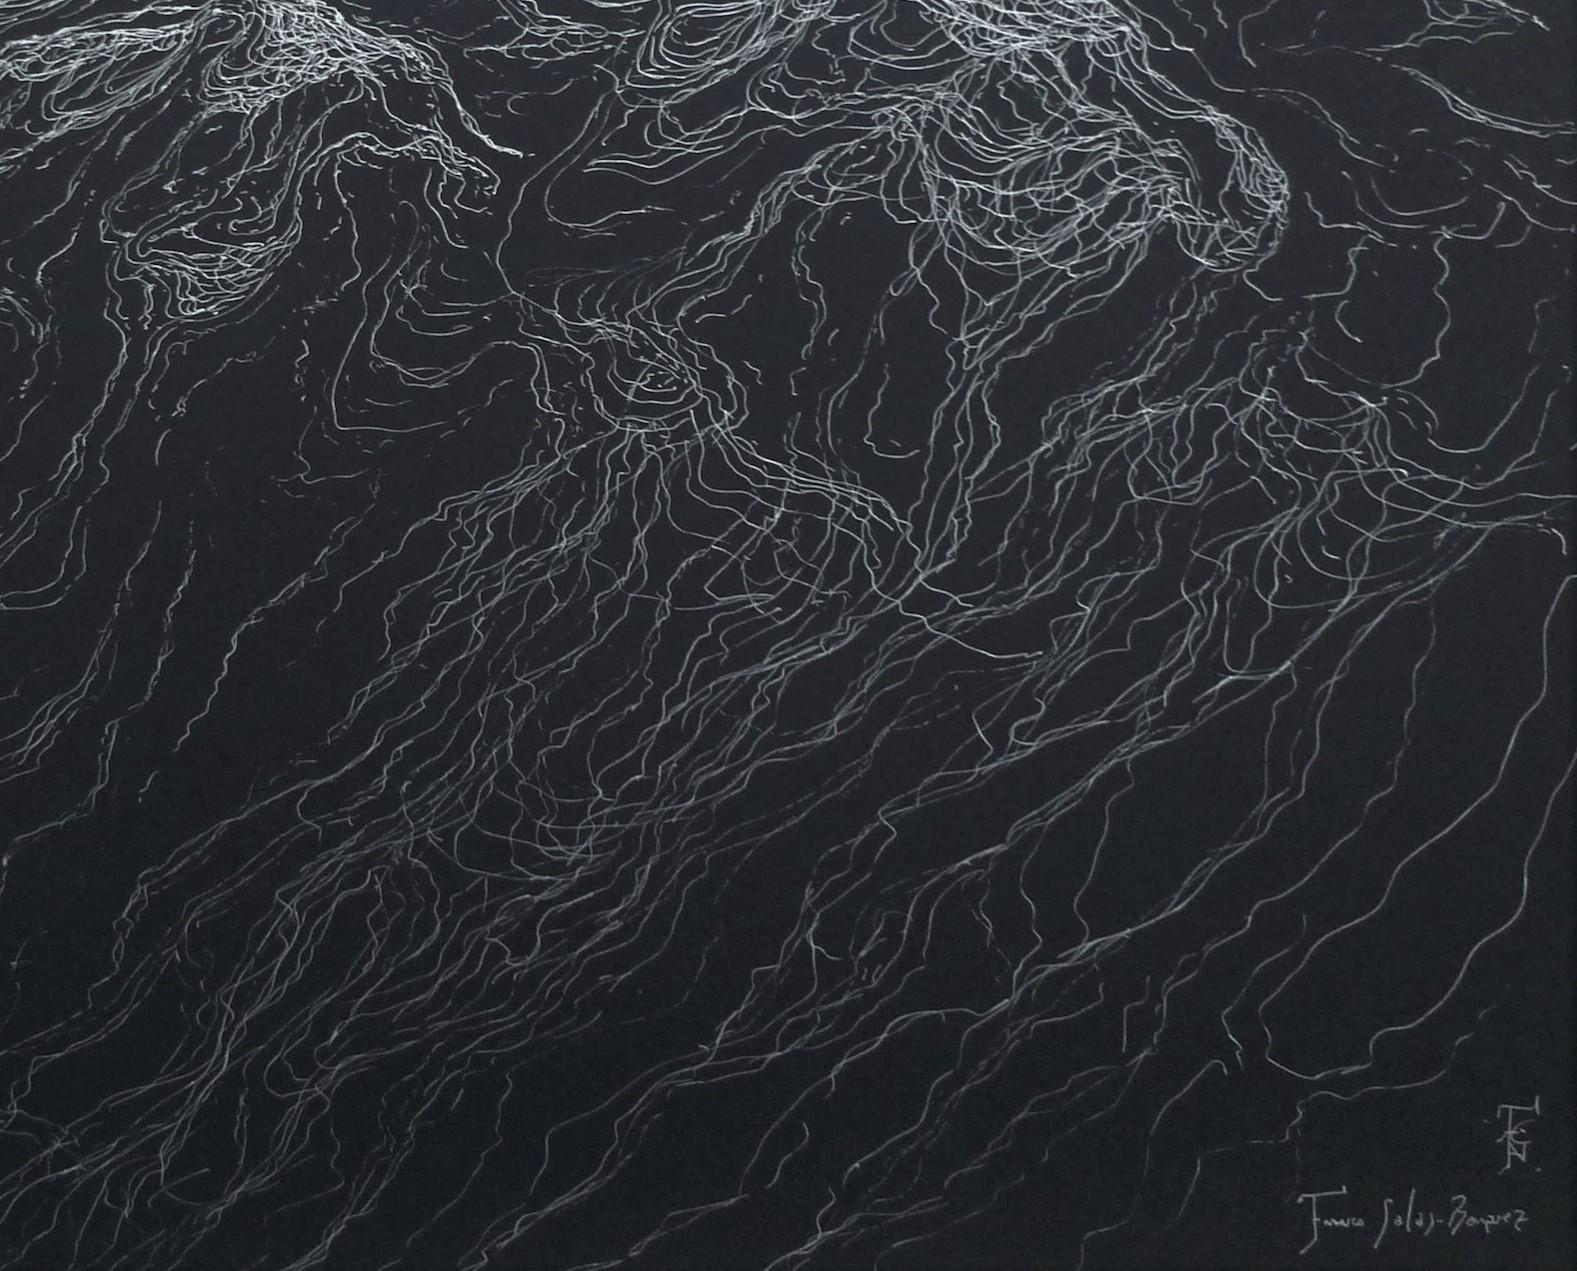 The walk of the swells (ink) by Franco Salas Borquez - Paysage marin, océan, vagues en vente 2